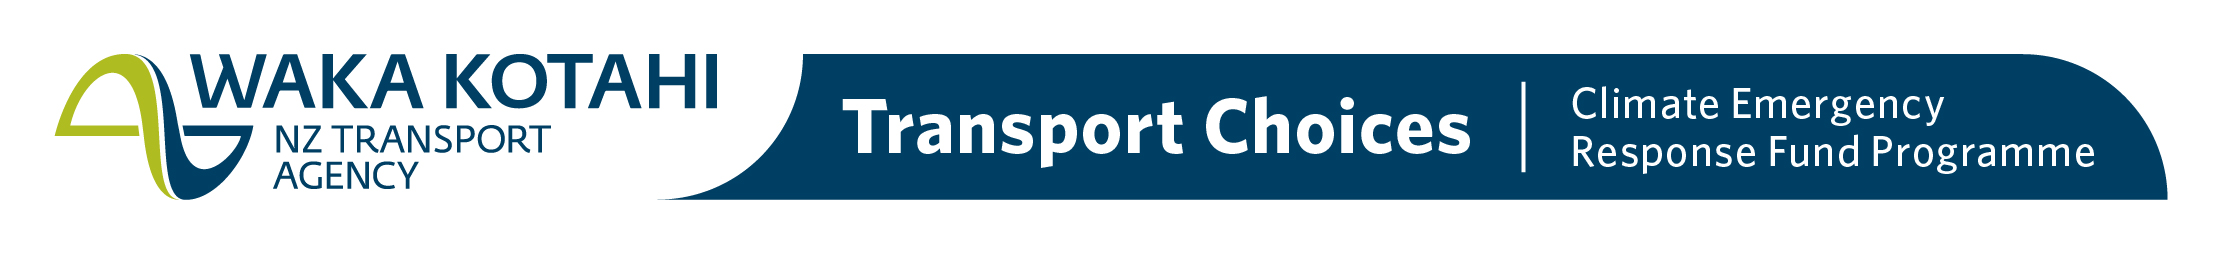 Waka Kotahi Transport Choices CERF Funding logo